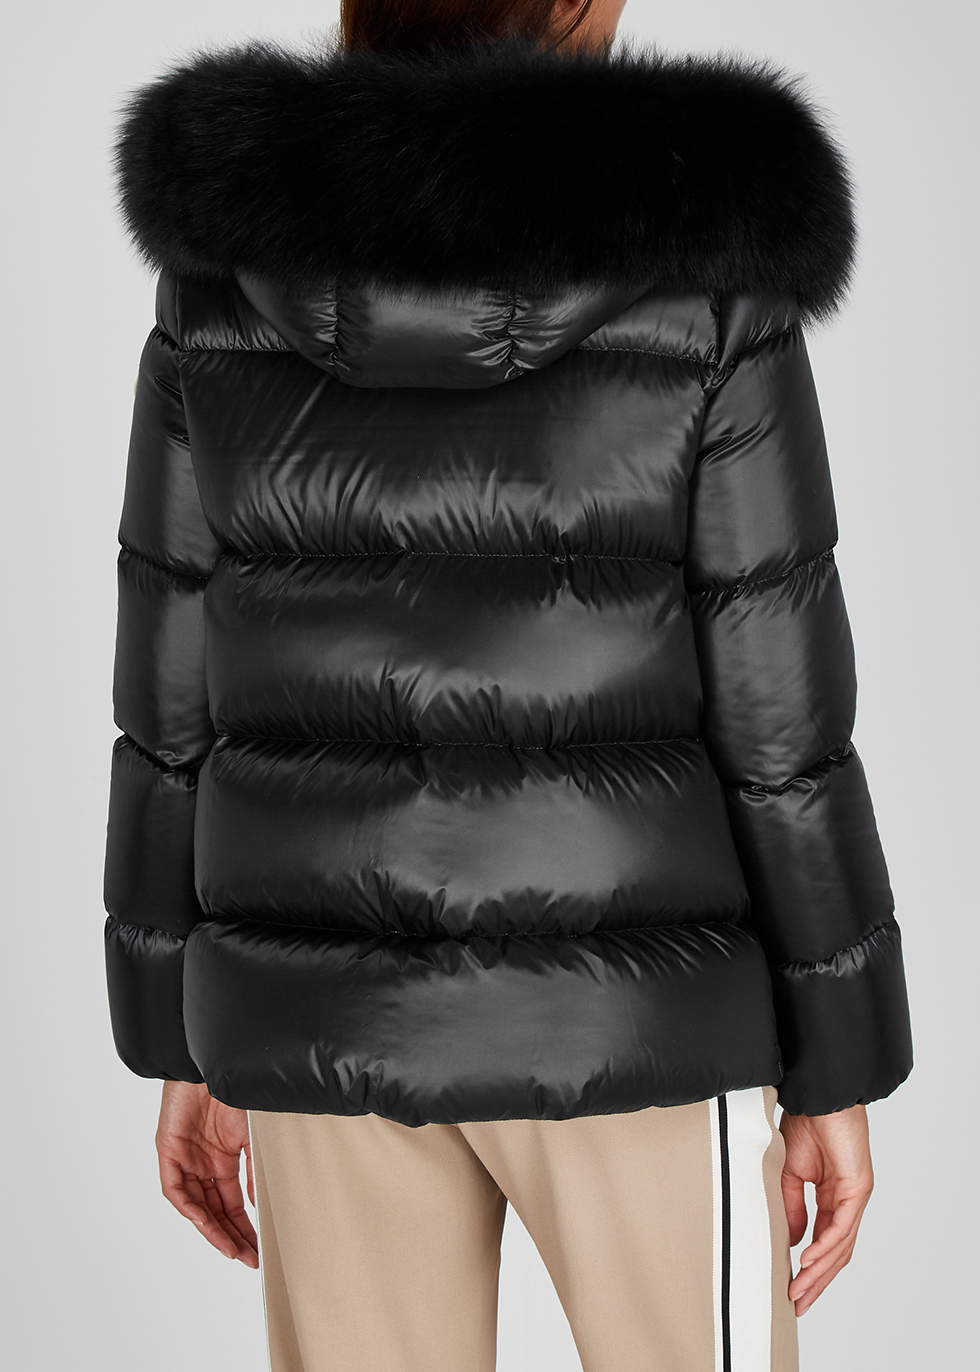 moncler fur coat